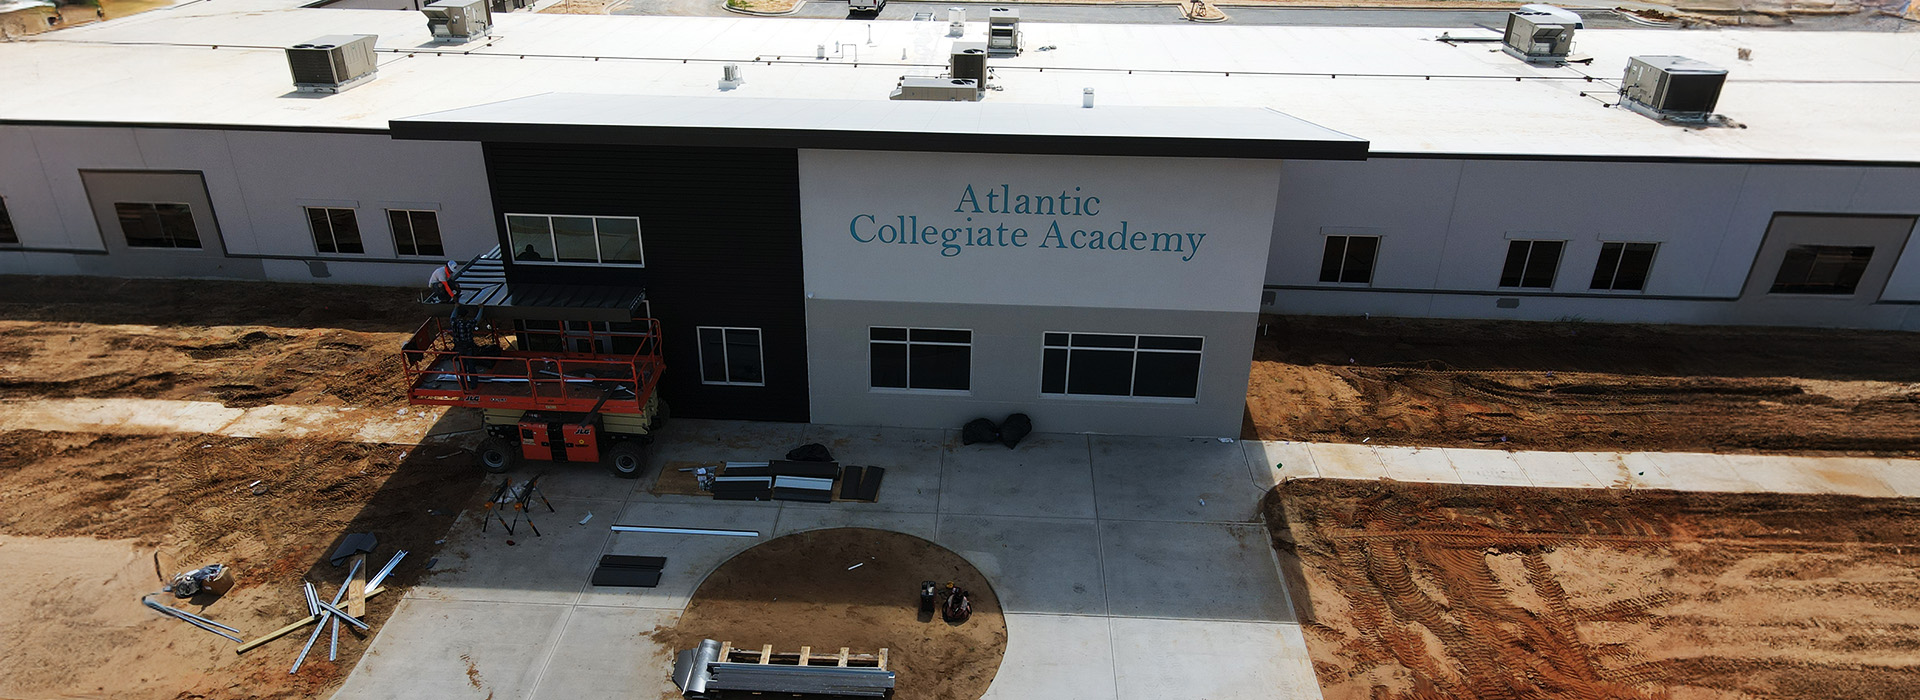 Atlantic Collegiate Academy July Construction